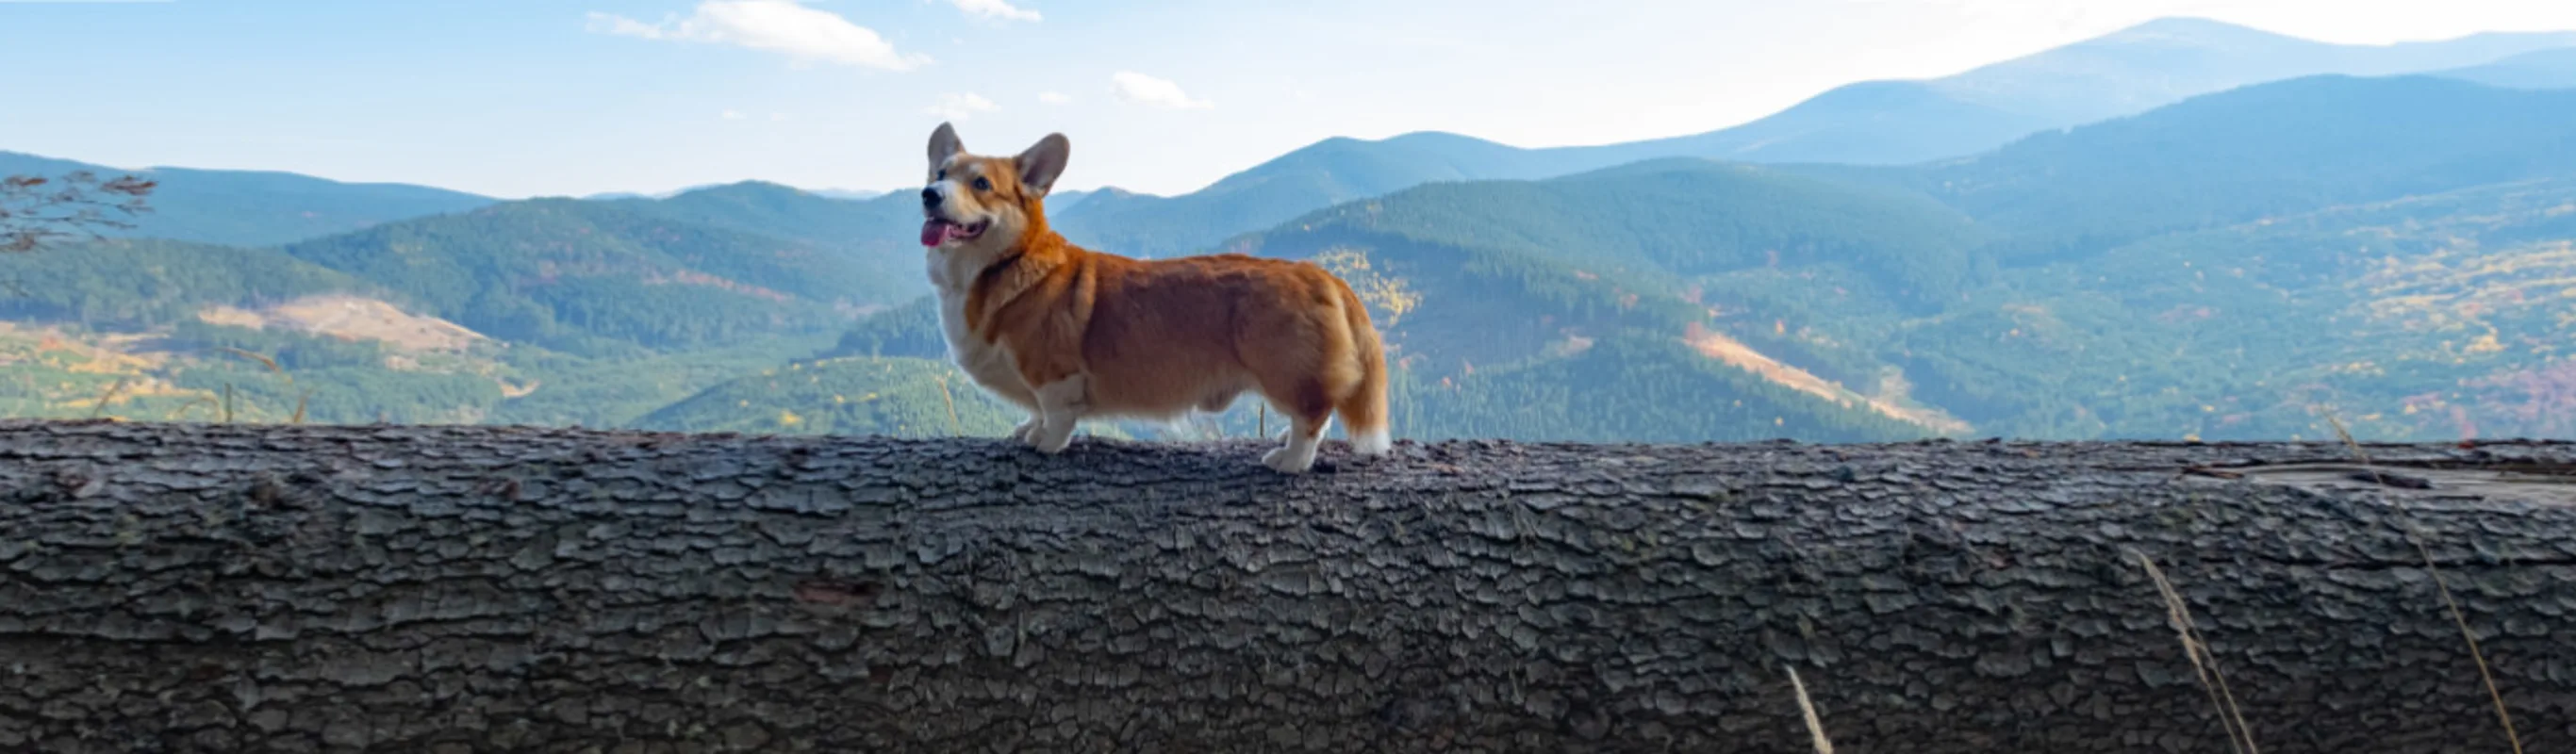 Corgi (Dog) Overlooking Blue Mountains